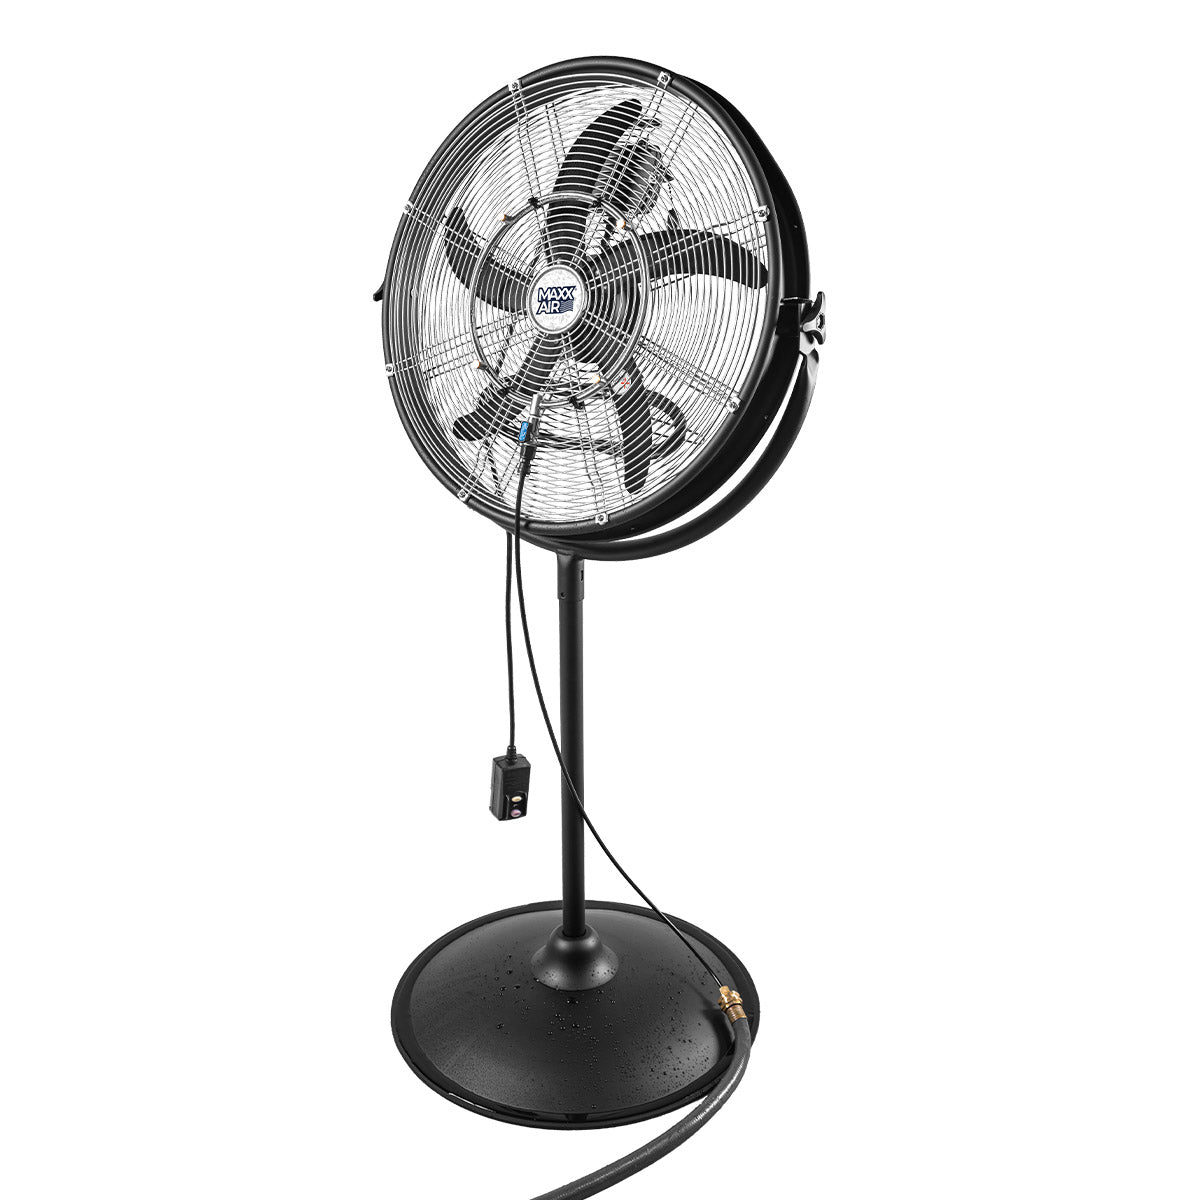 Maxx Air 20 In. 3-Speed Tilting Outdoor Rated Pedestal Fan